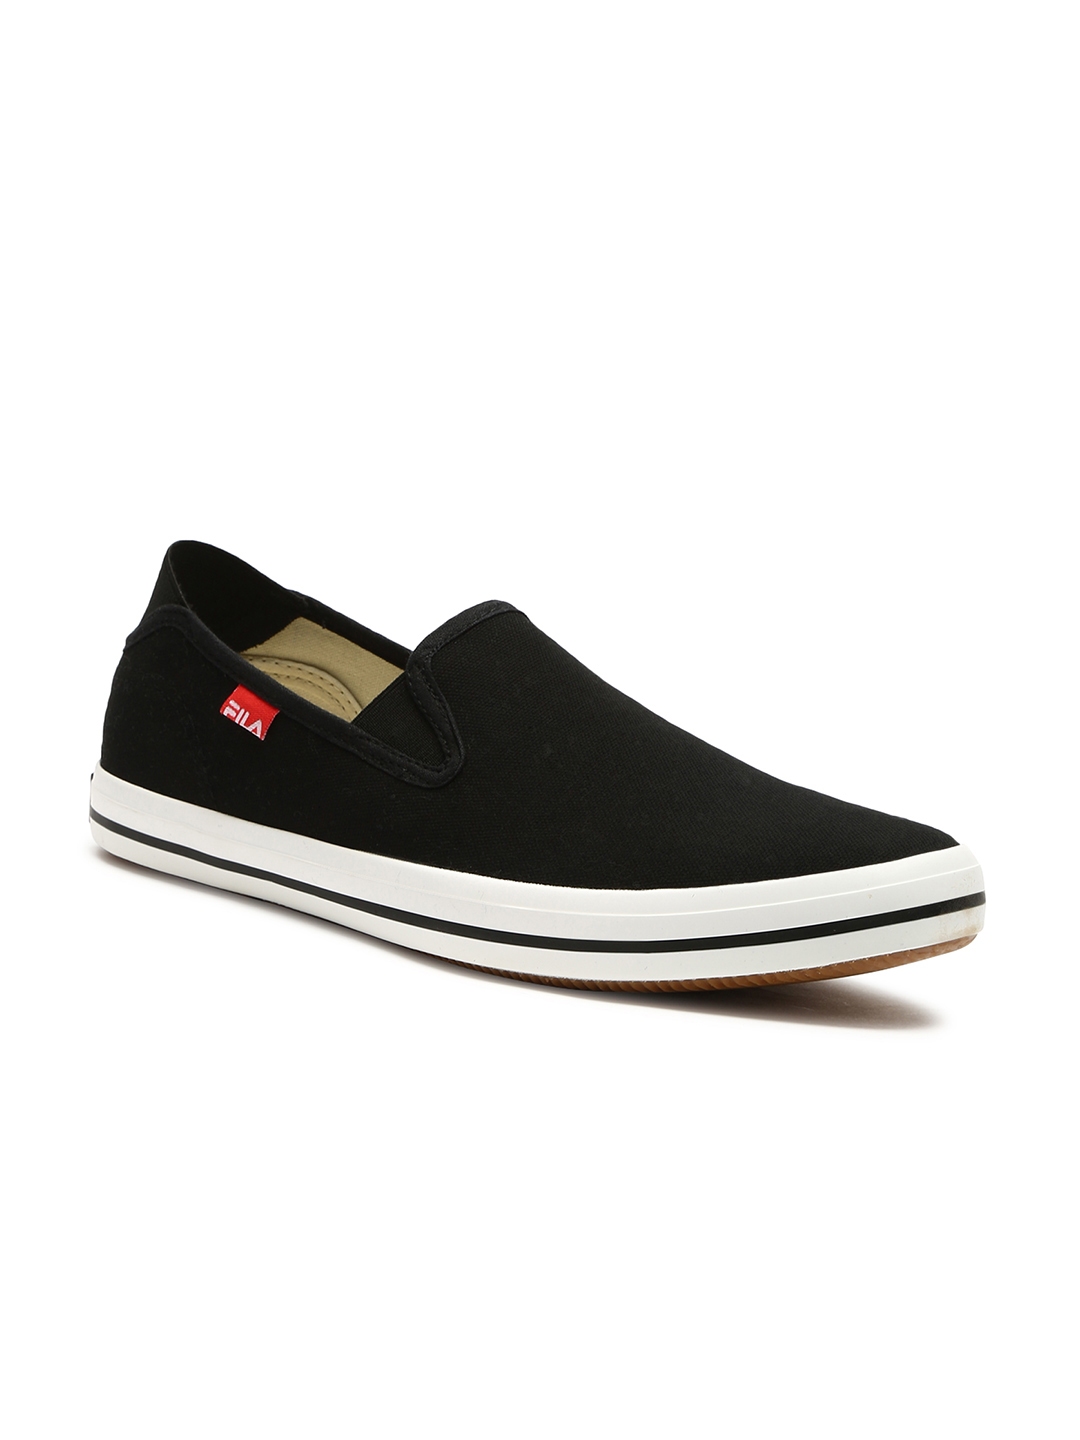 Buy FILA Men Black Slip On Sneakers - Casual Shoes for Men 10770826 ...